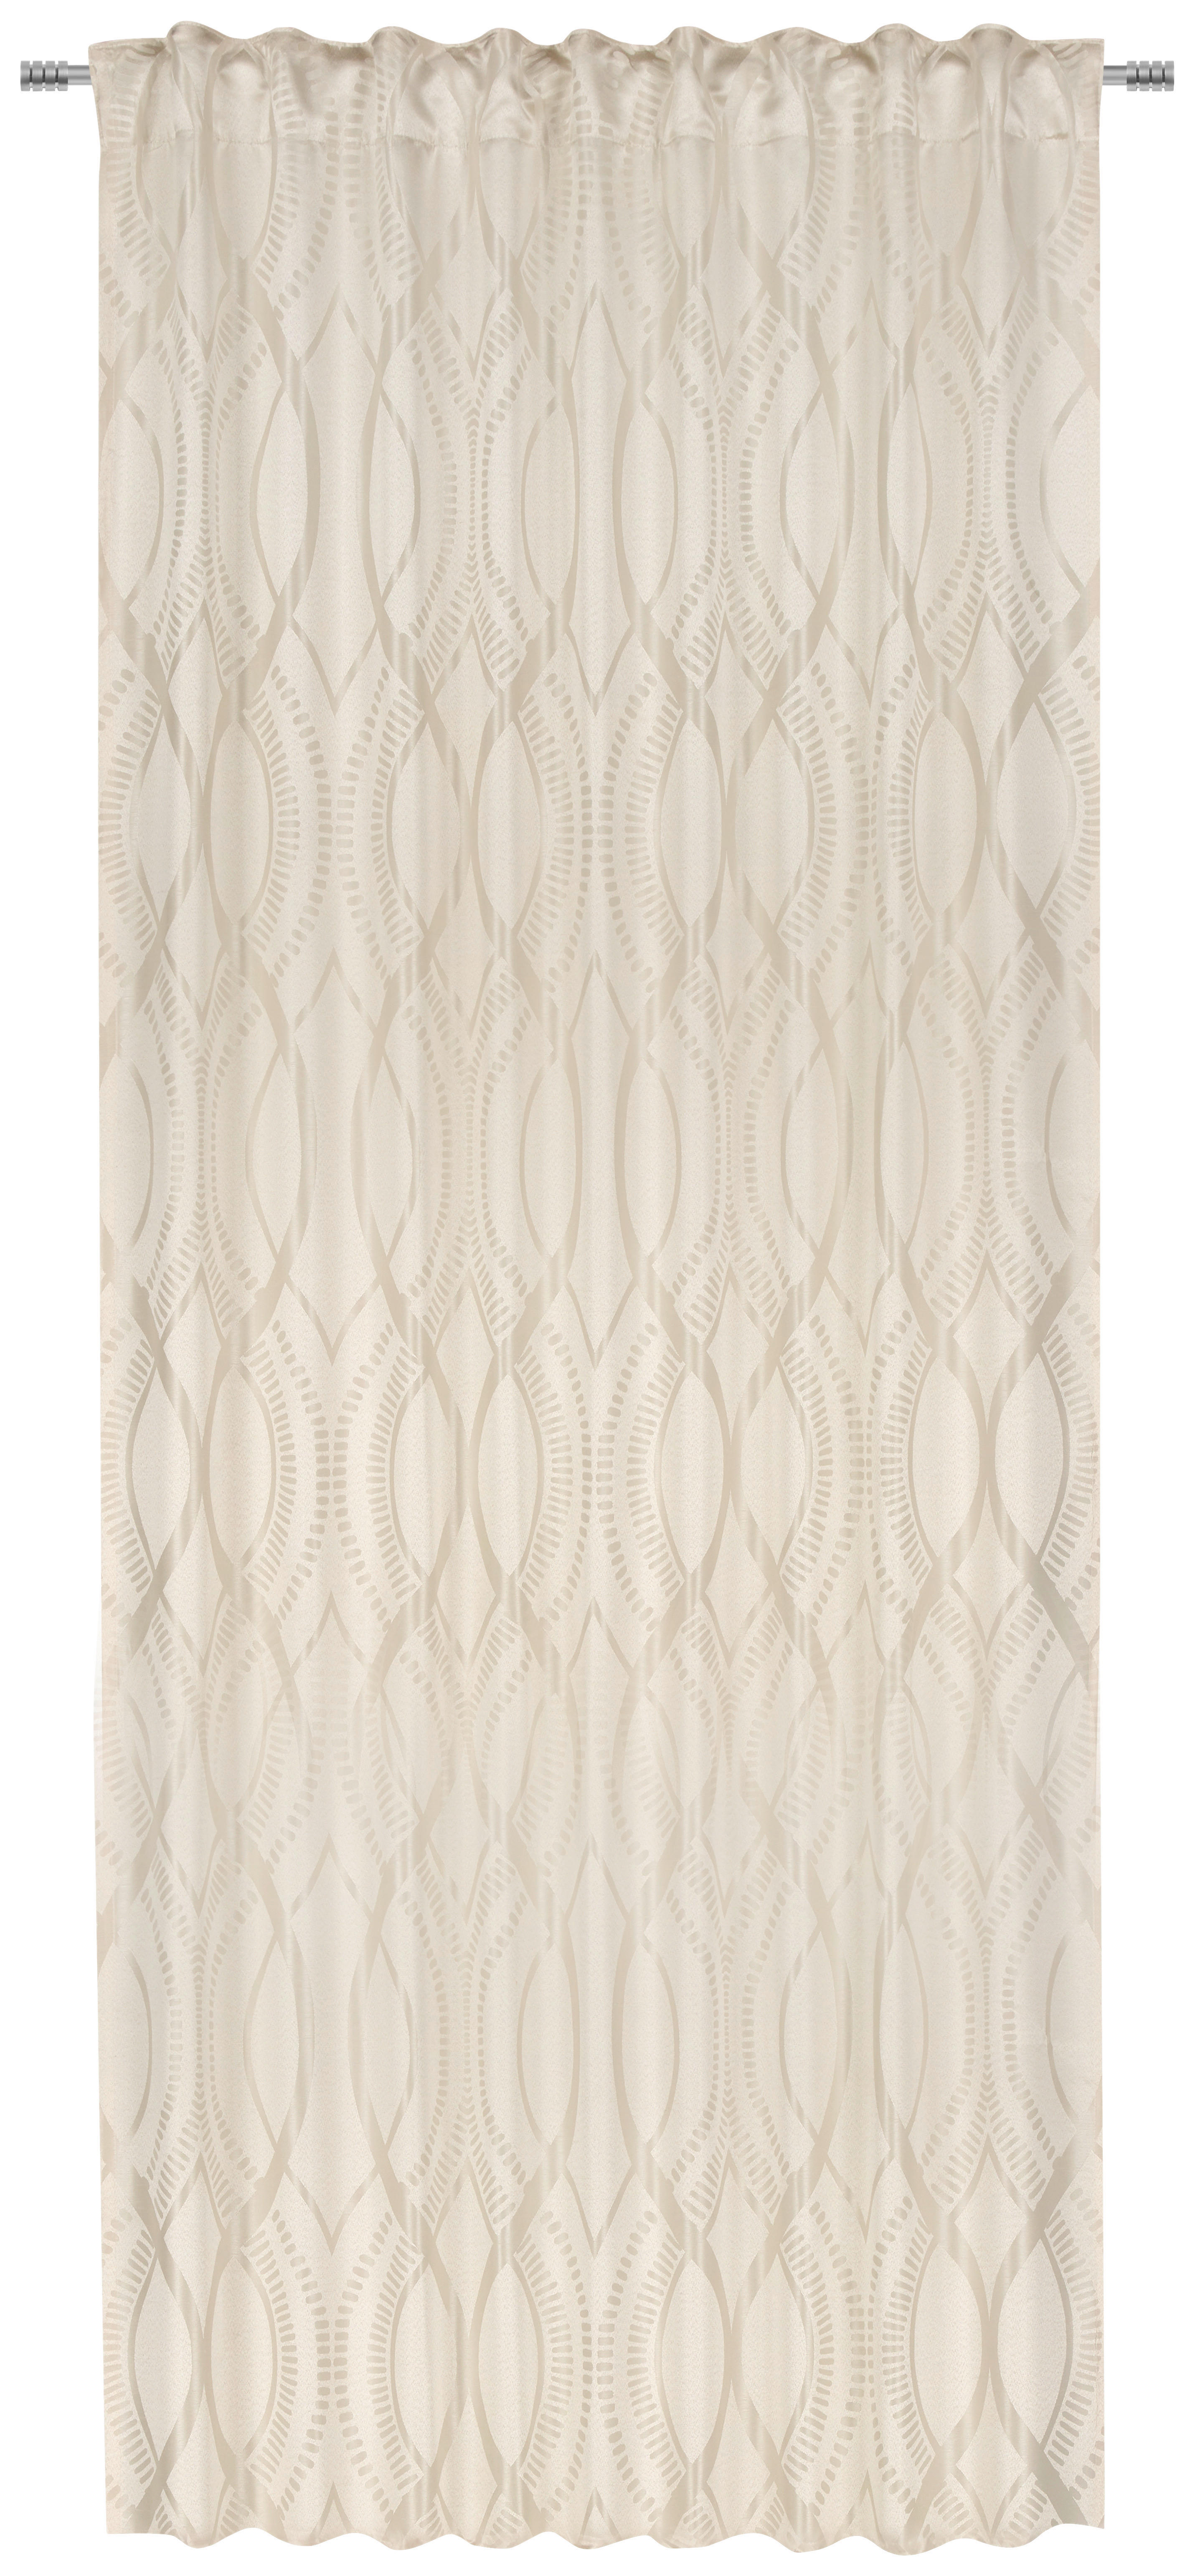 FERTIGVORHANG blickdicht  - Sandfarben, Konventionell, Textil (140/245cm) - Esposa